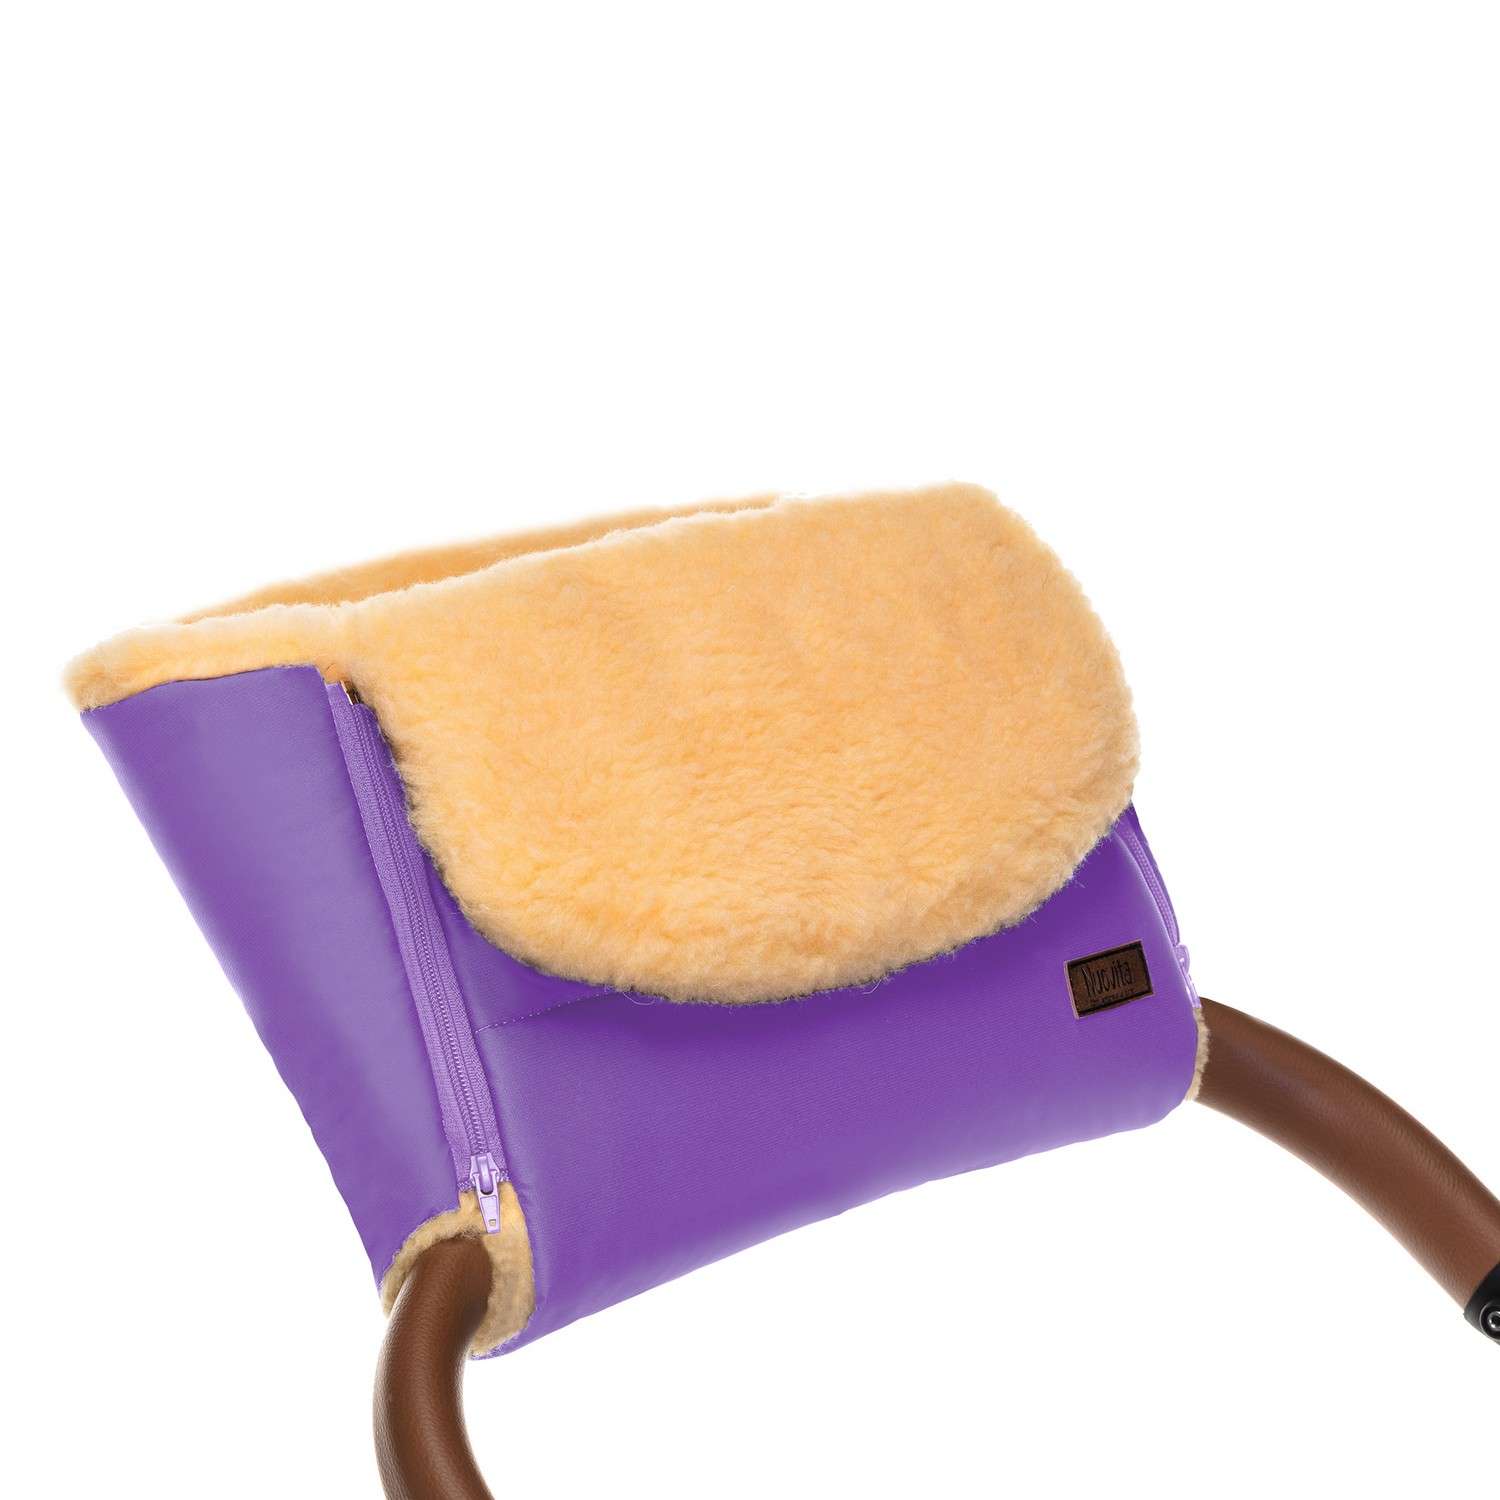 Муфта для коляски Nuovita меховая Vichingo Pesco Фиолетовый NUO_mVICP_2153 - фото 2